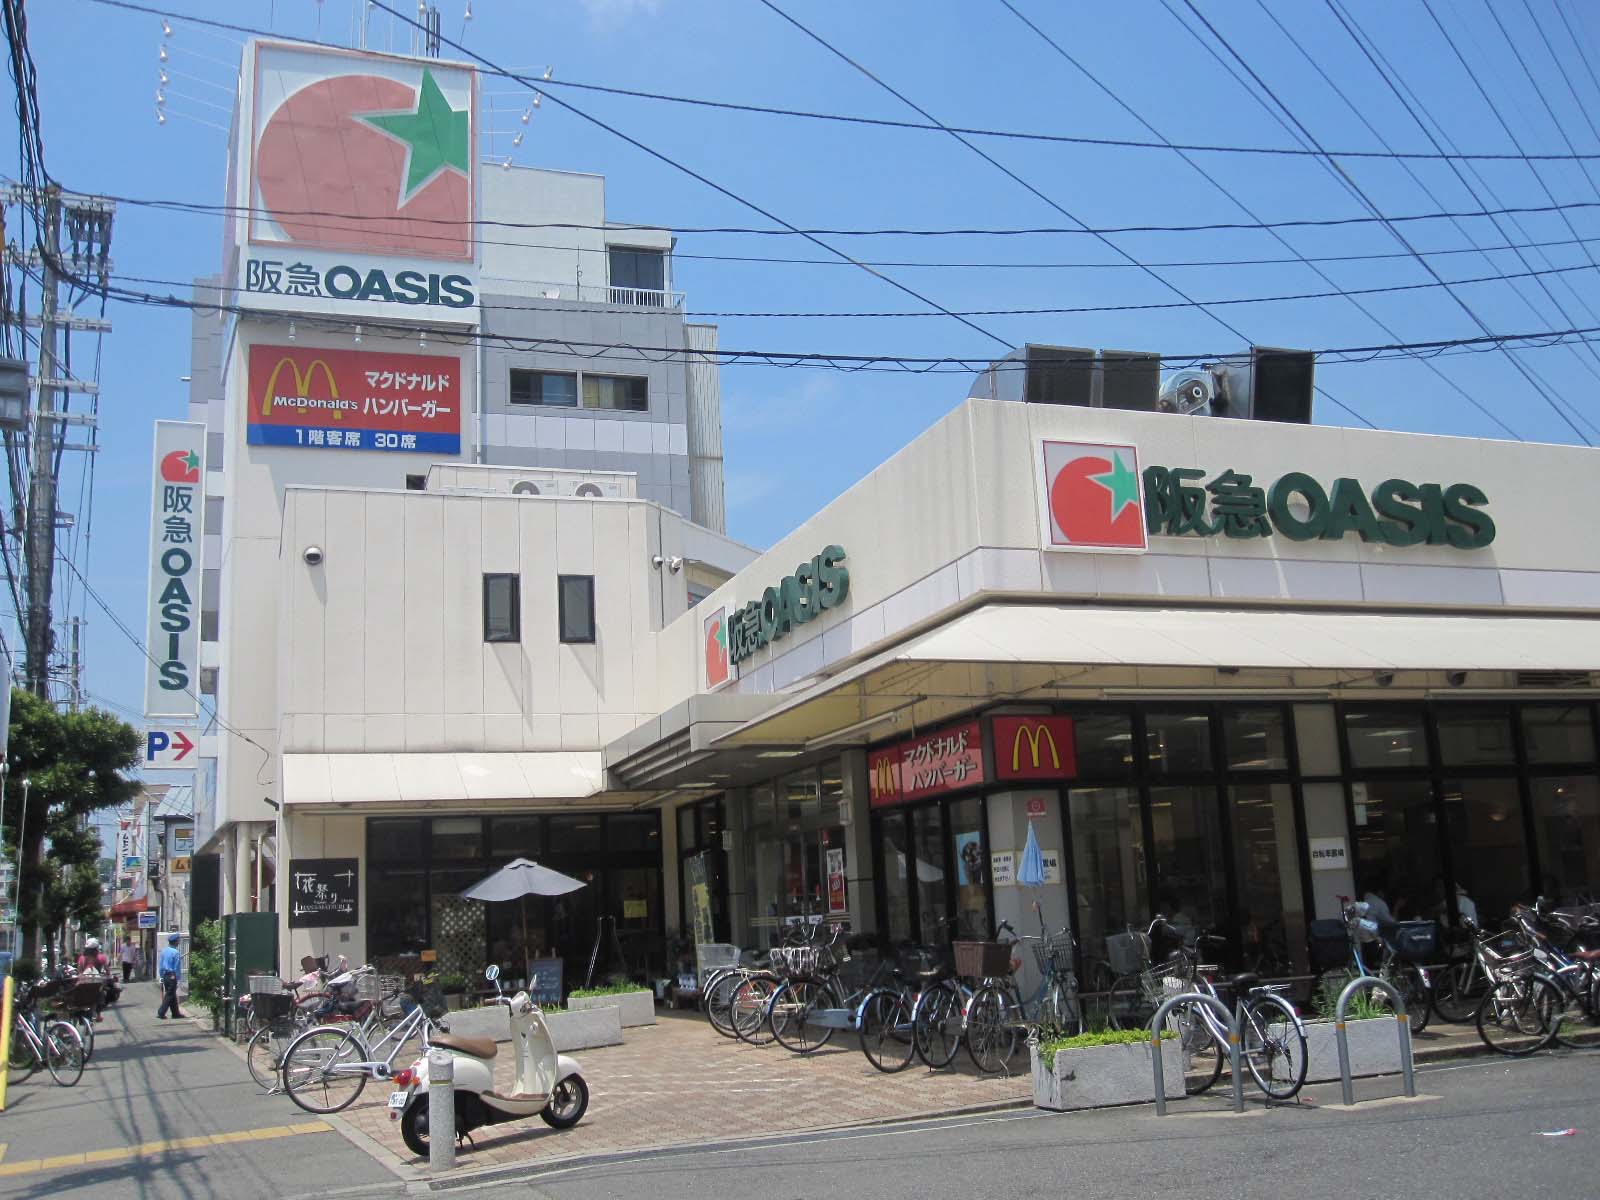 Supermarket. 111m to Hankyu Oasis Ozone store (Super)